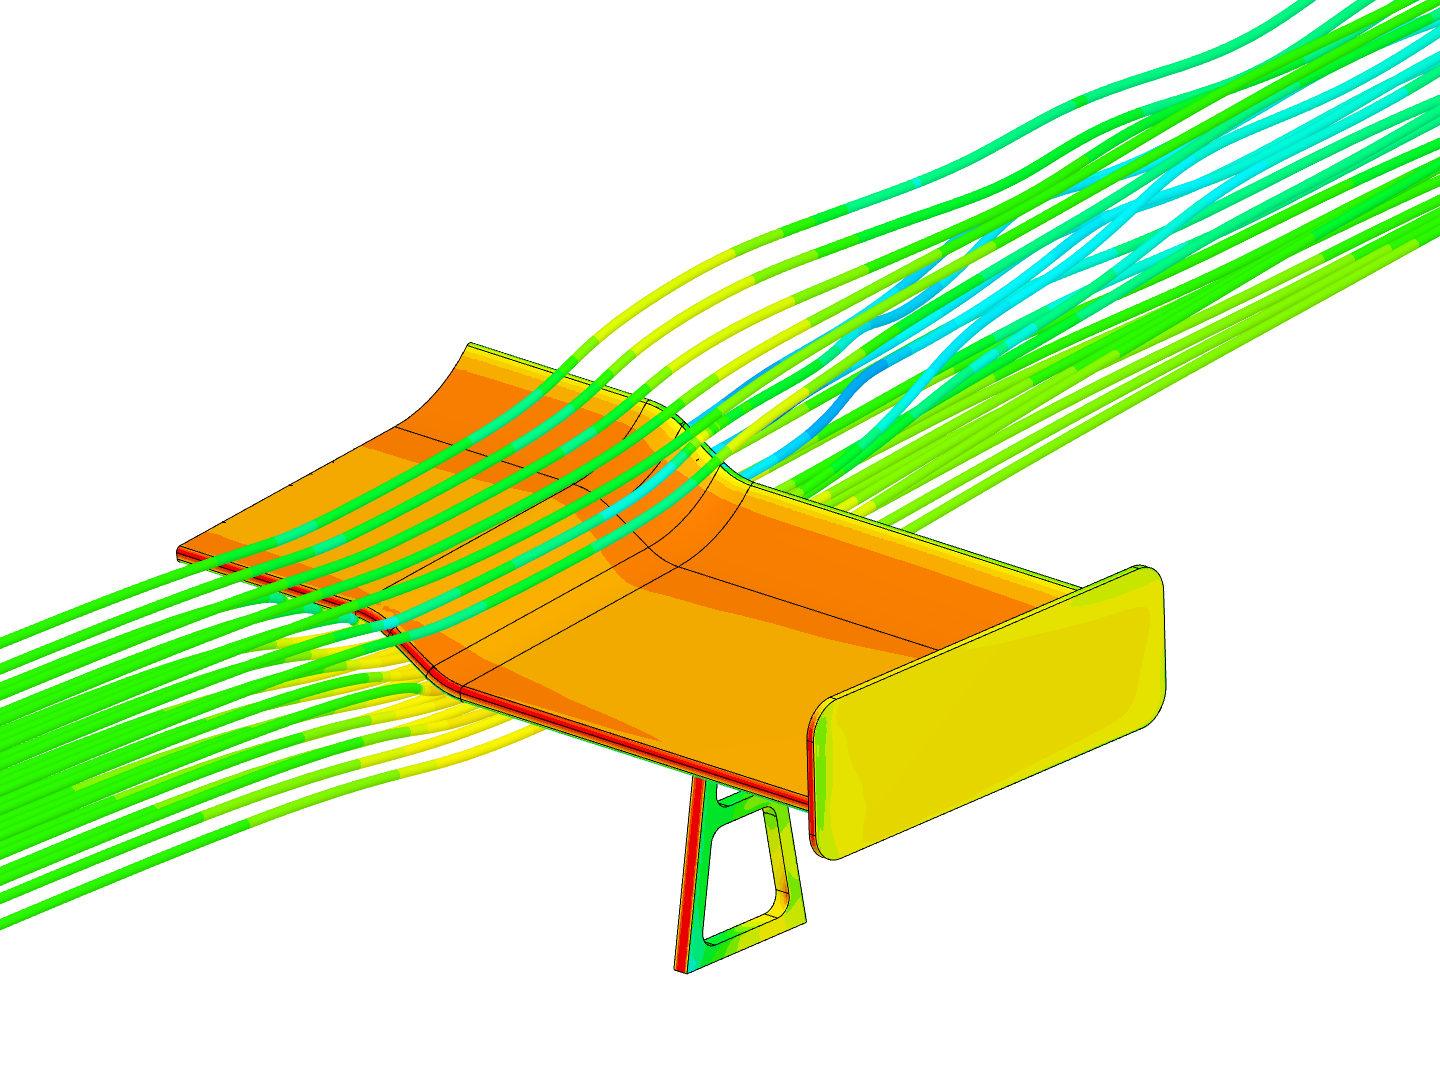 Airflow Around a GT car image